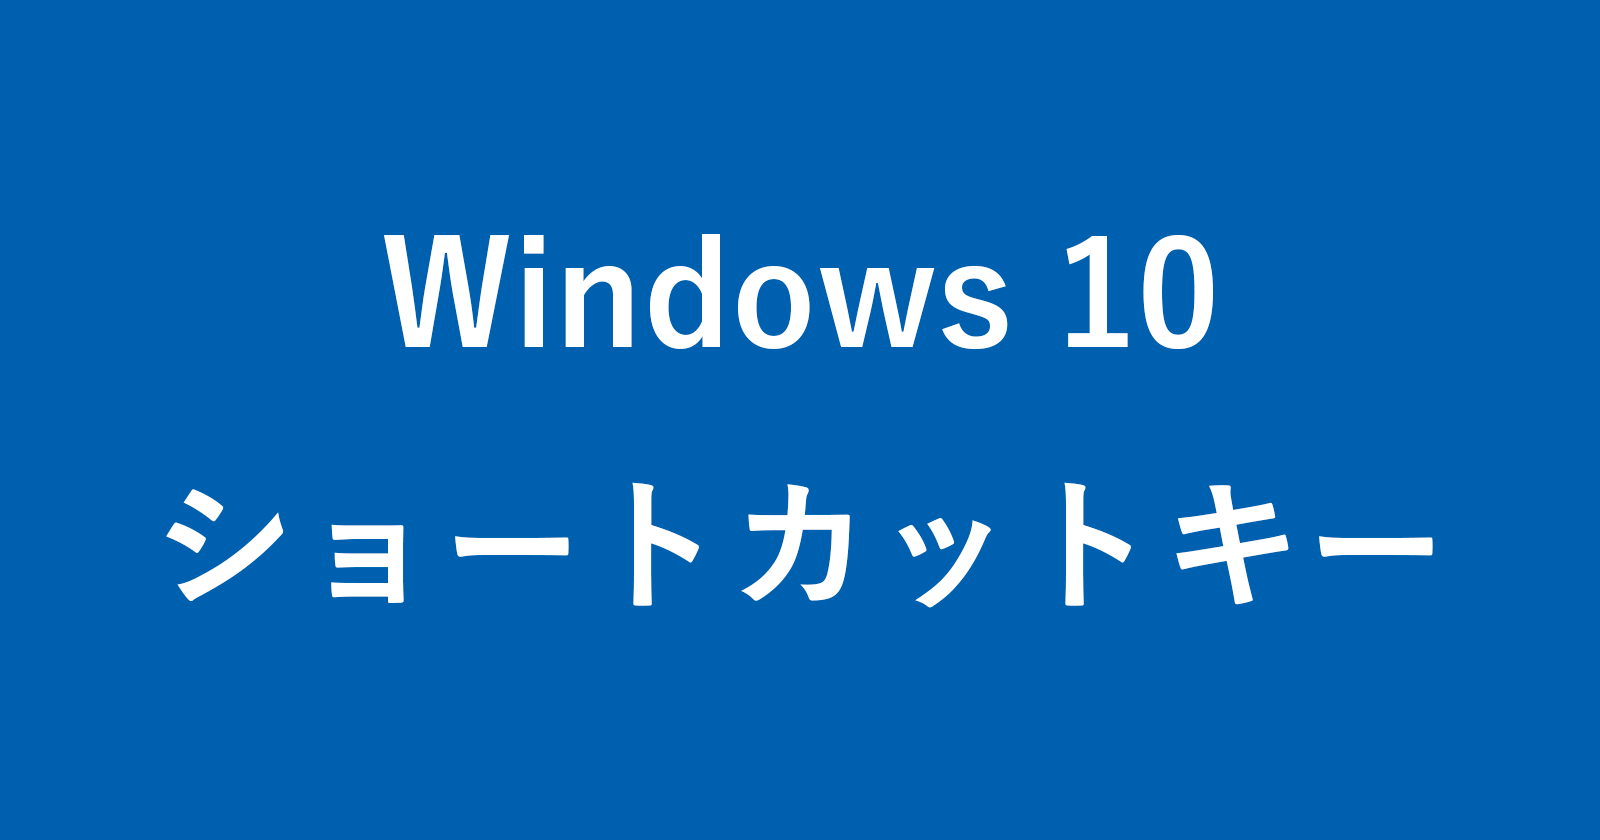 windows 10 shortcut key